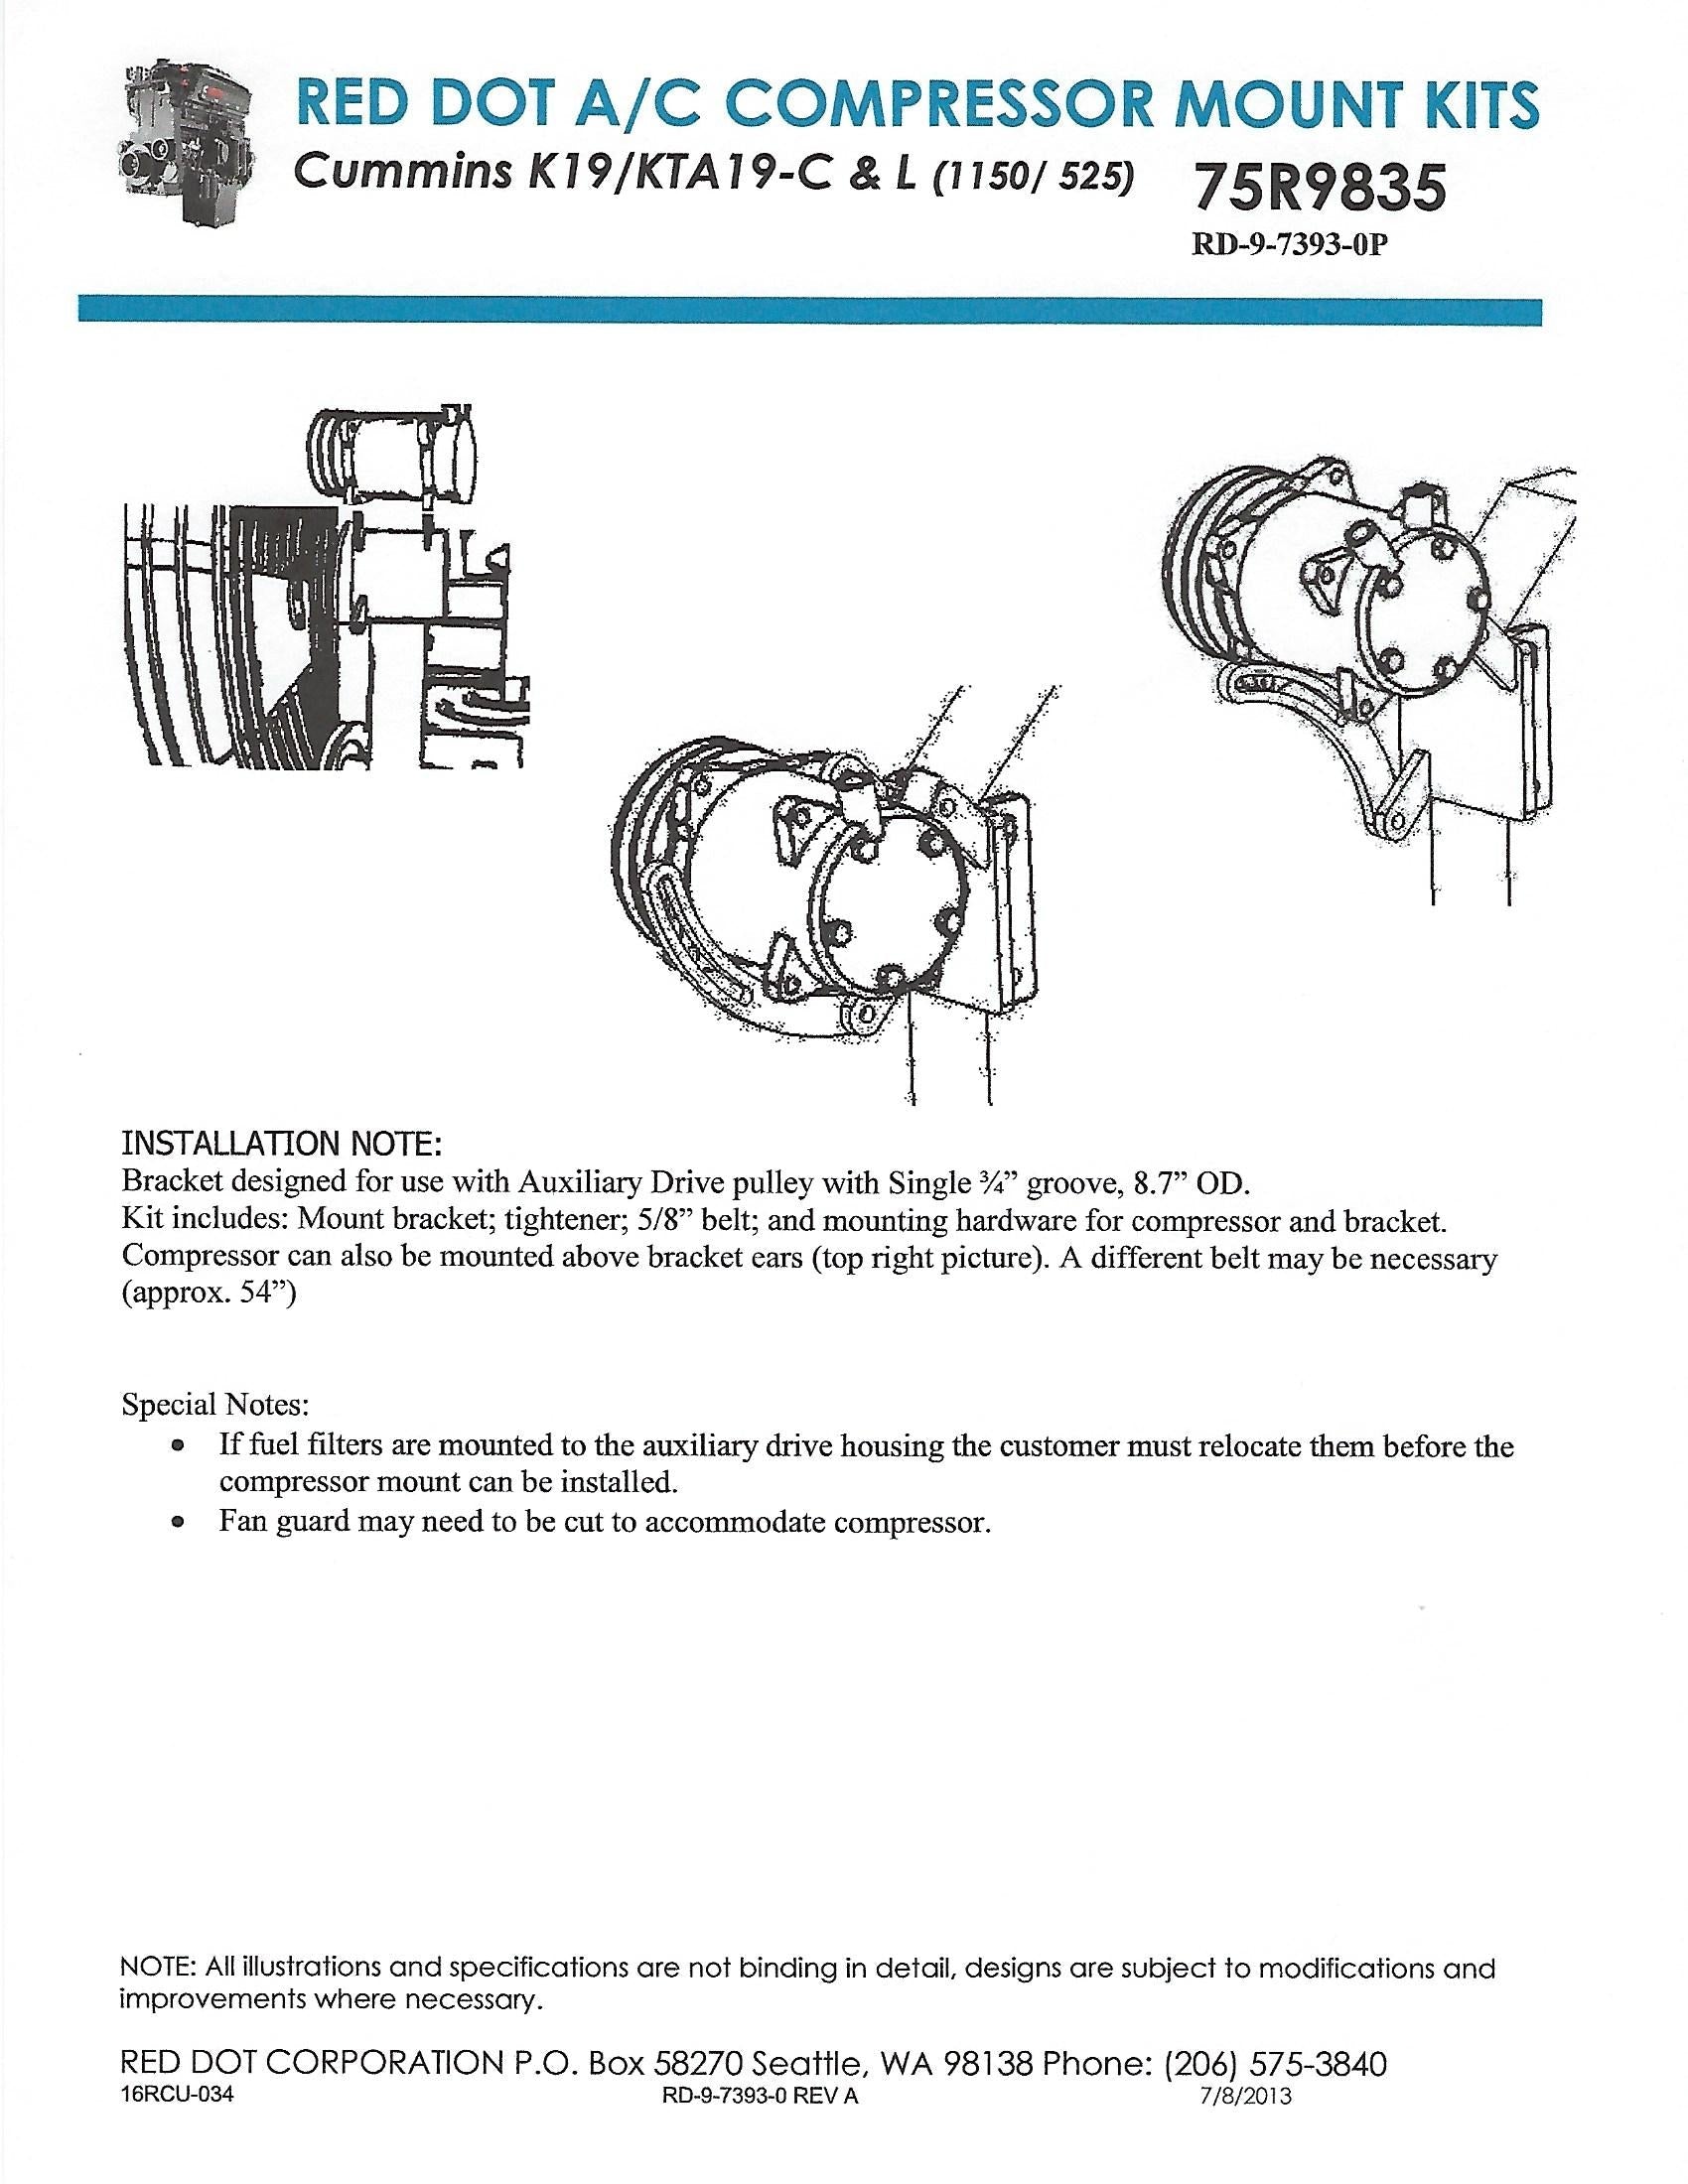 Ac Compressor Mount Kit For Cummins K19 Kta19-C And L Engines 75R9835 Mounting